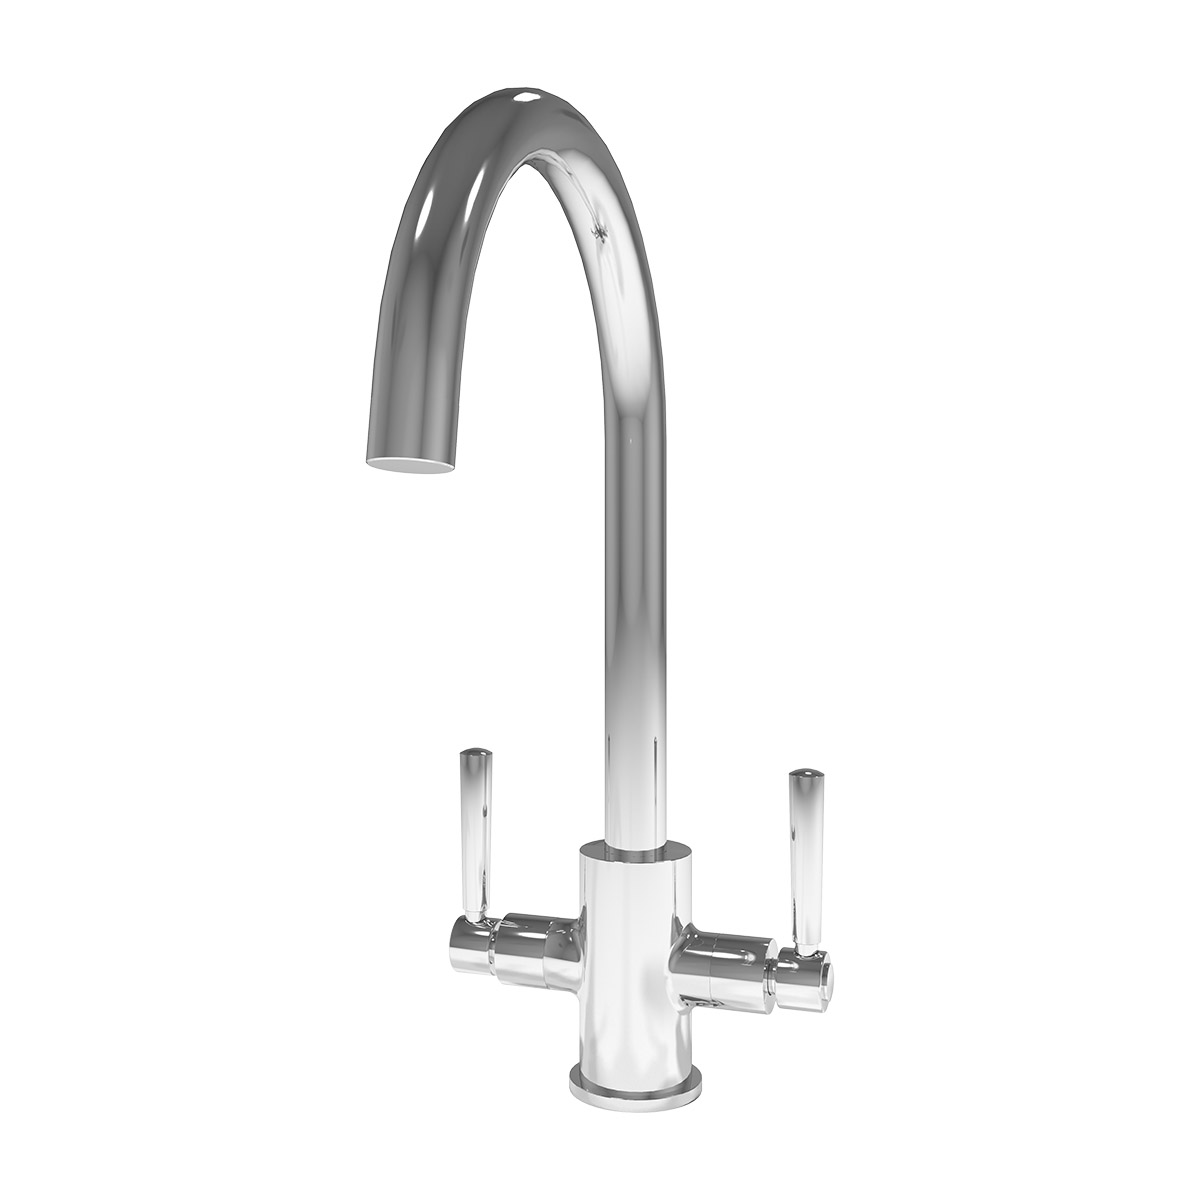 Noa dual lever kitchen tap in chrome